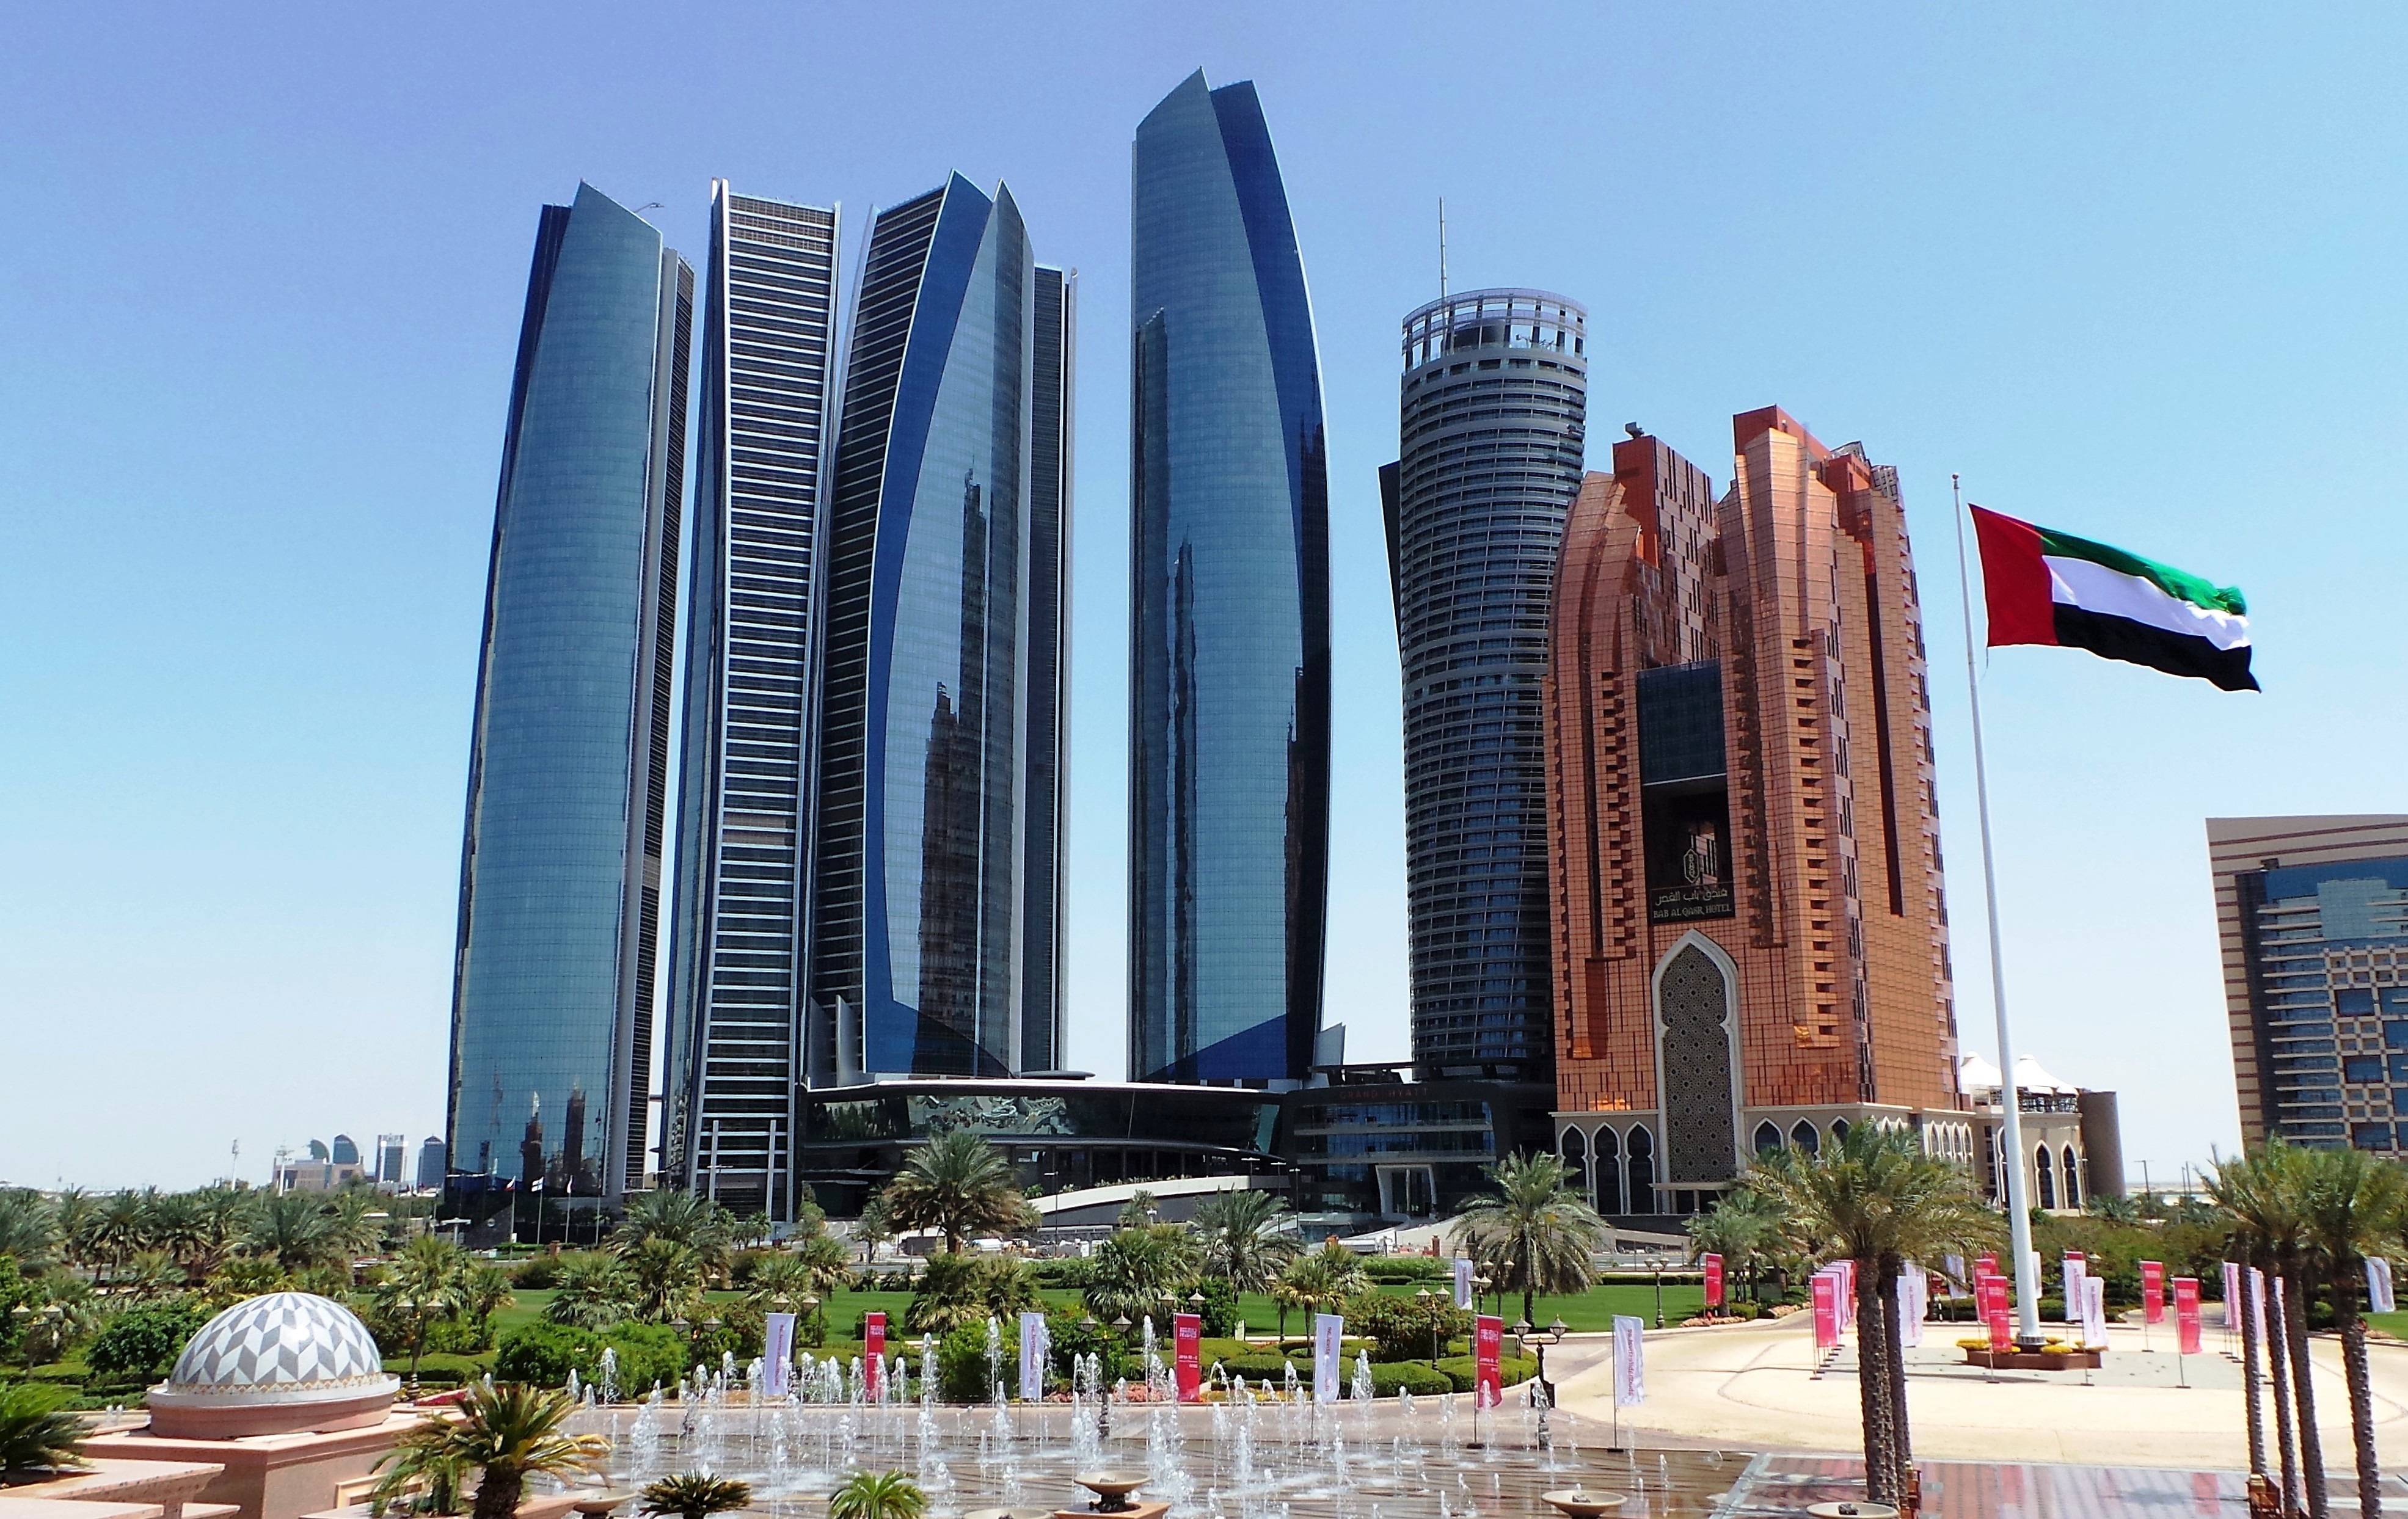 Discover Abu Dhabi